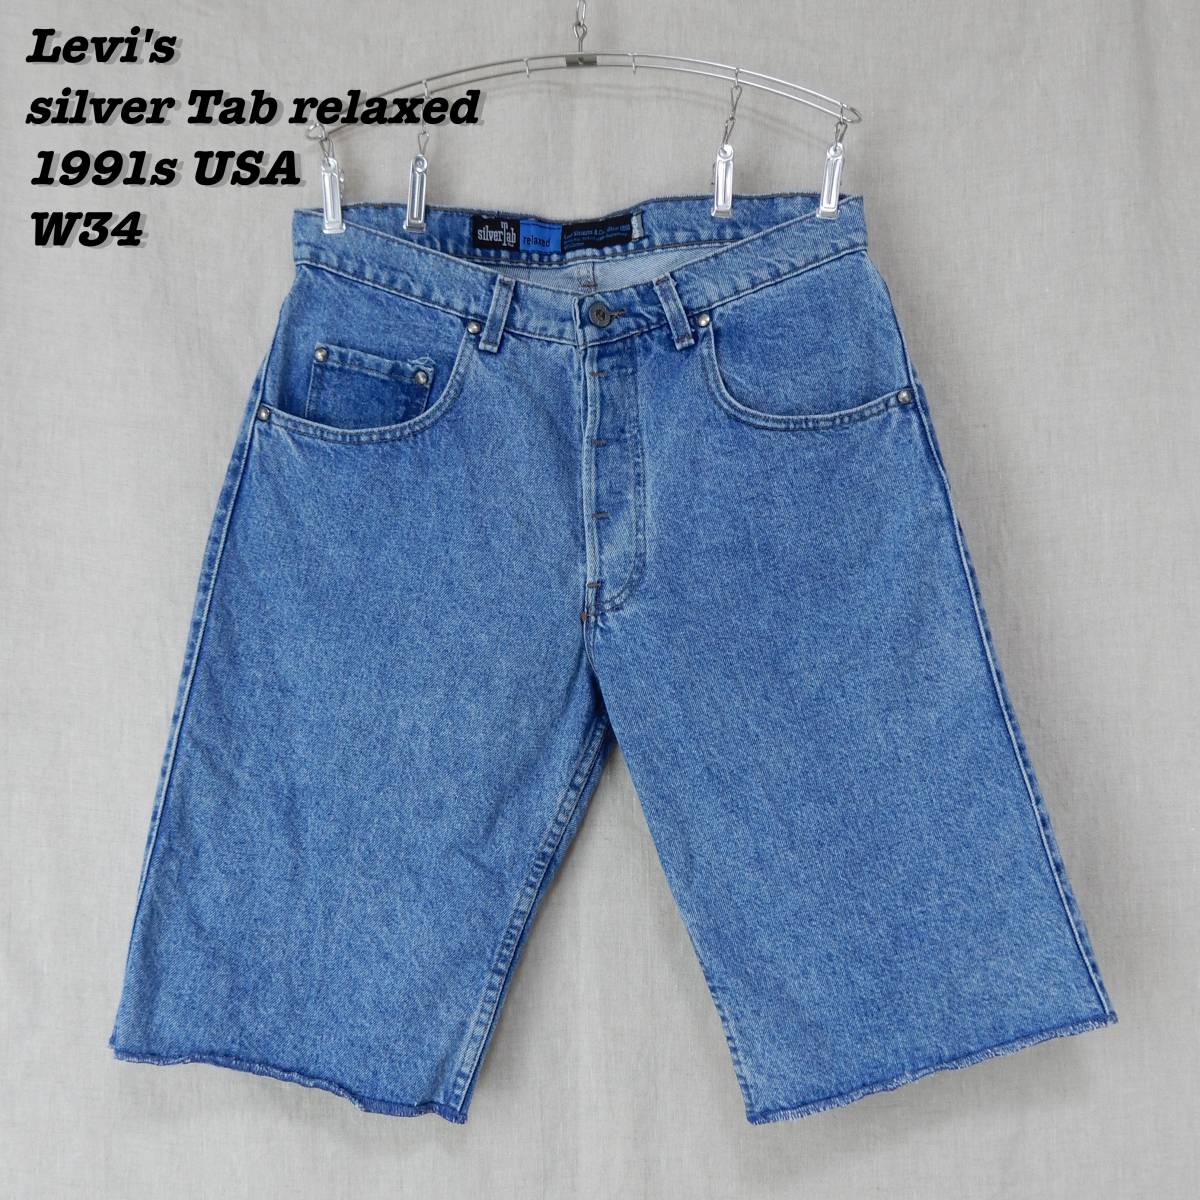 Levi's silver Tab DENIM SHORT PANTS Made in USA 1990s W34 リーバイス シルバータブ デニムショートパンツ アメリカ製 1990年代